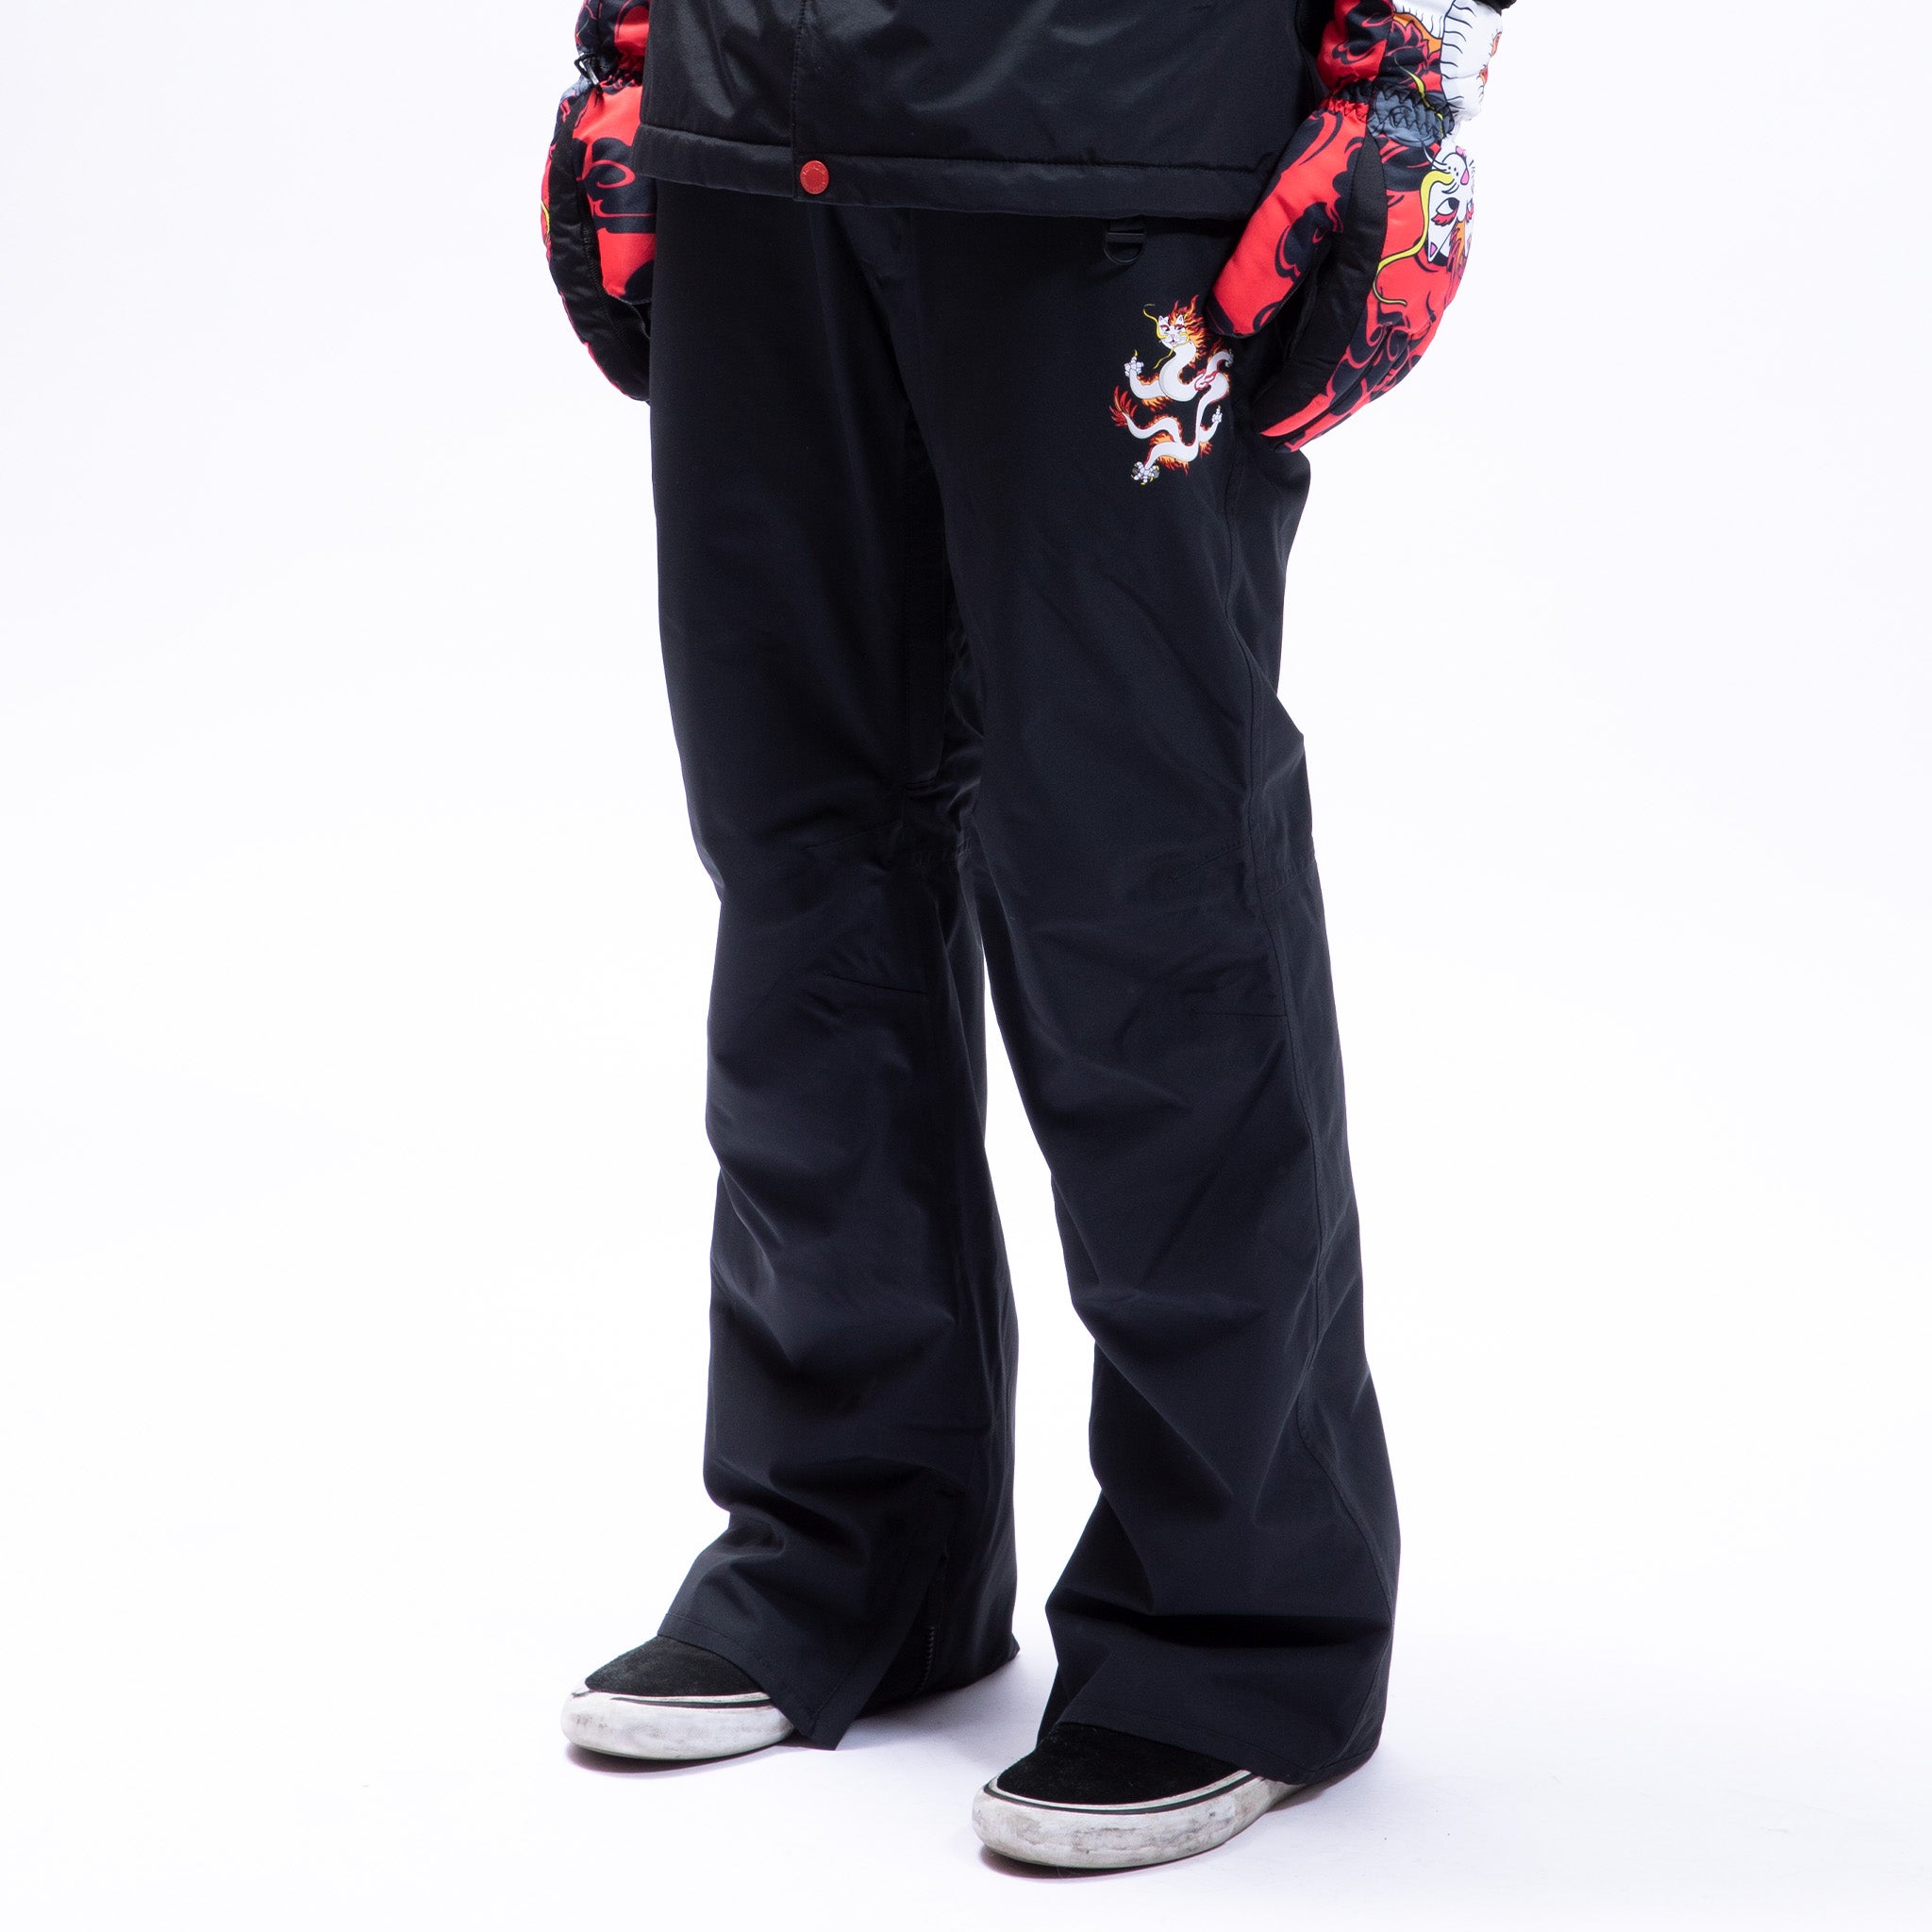 Dragonerm Snowboard Pants (Black)